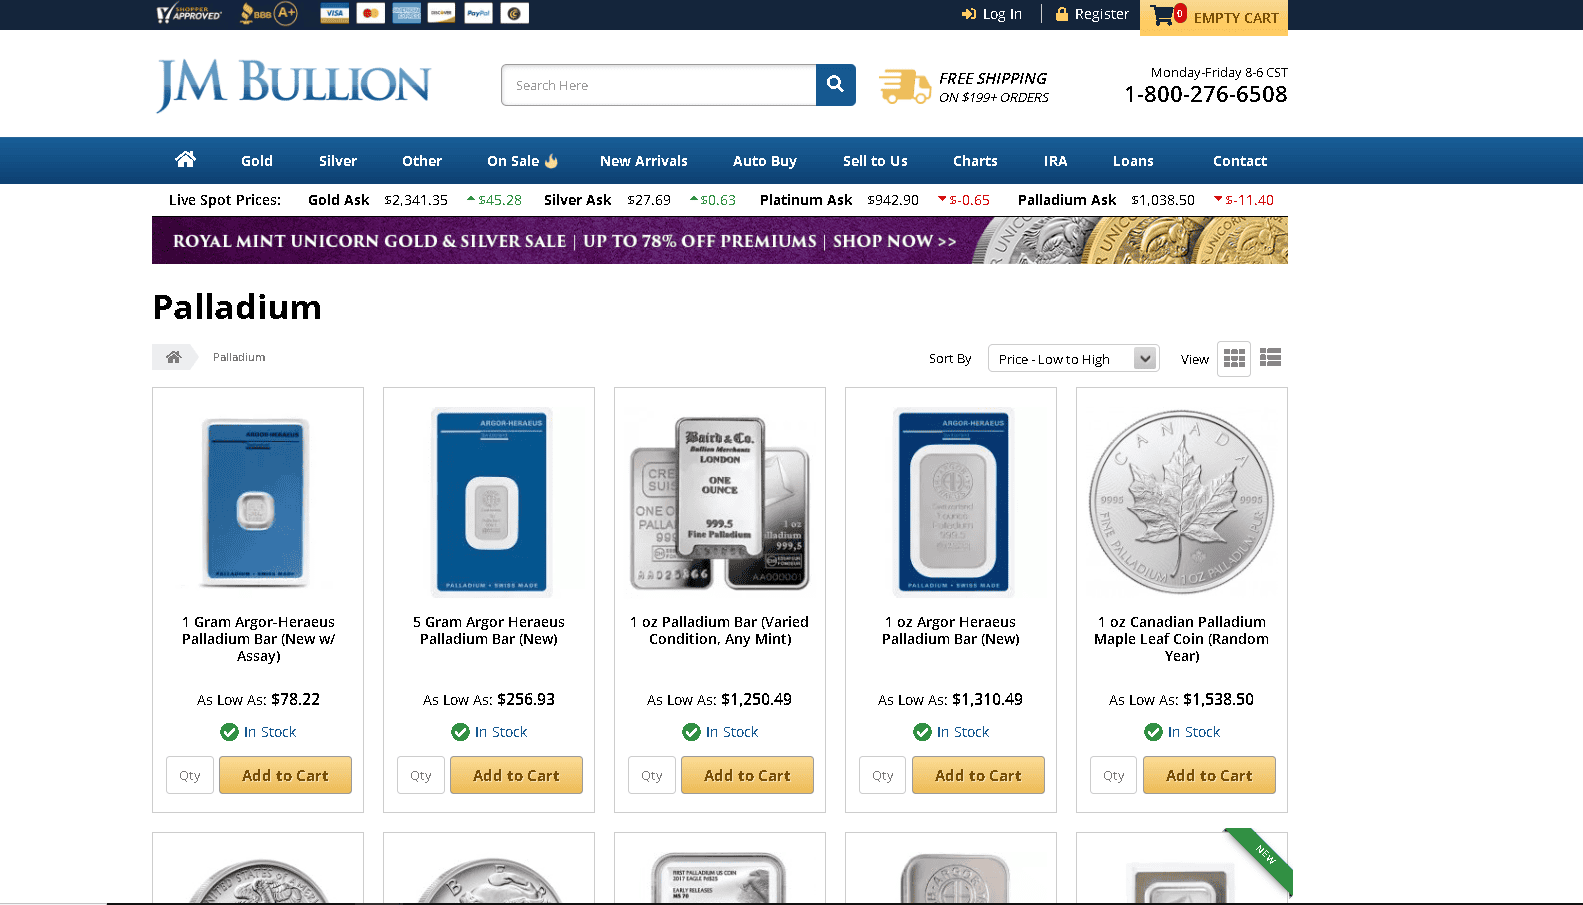 JM Bullion don't sell fake palladium coins and bars. They sell real palladium bullion.